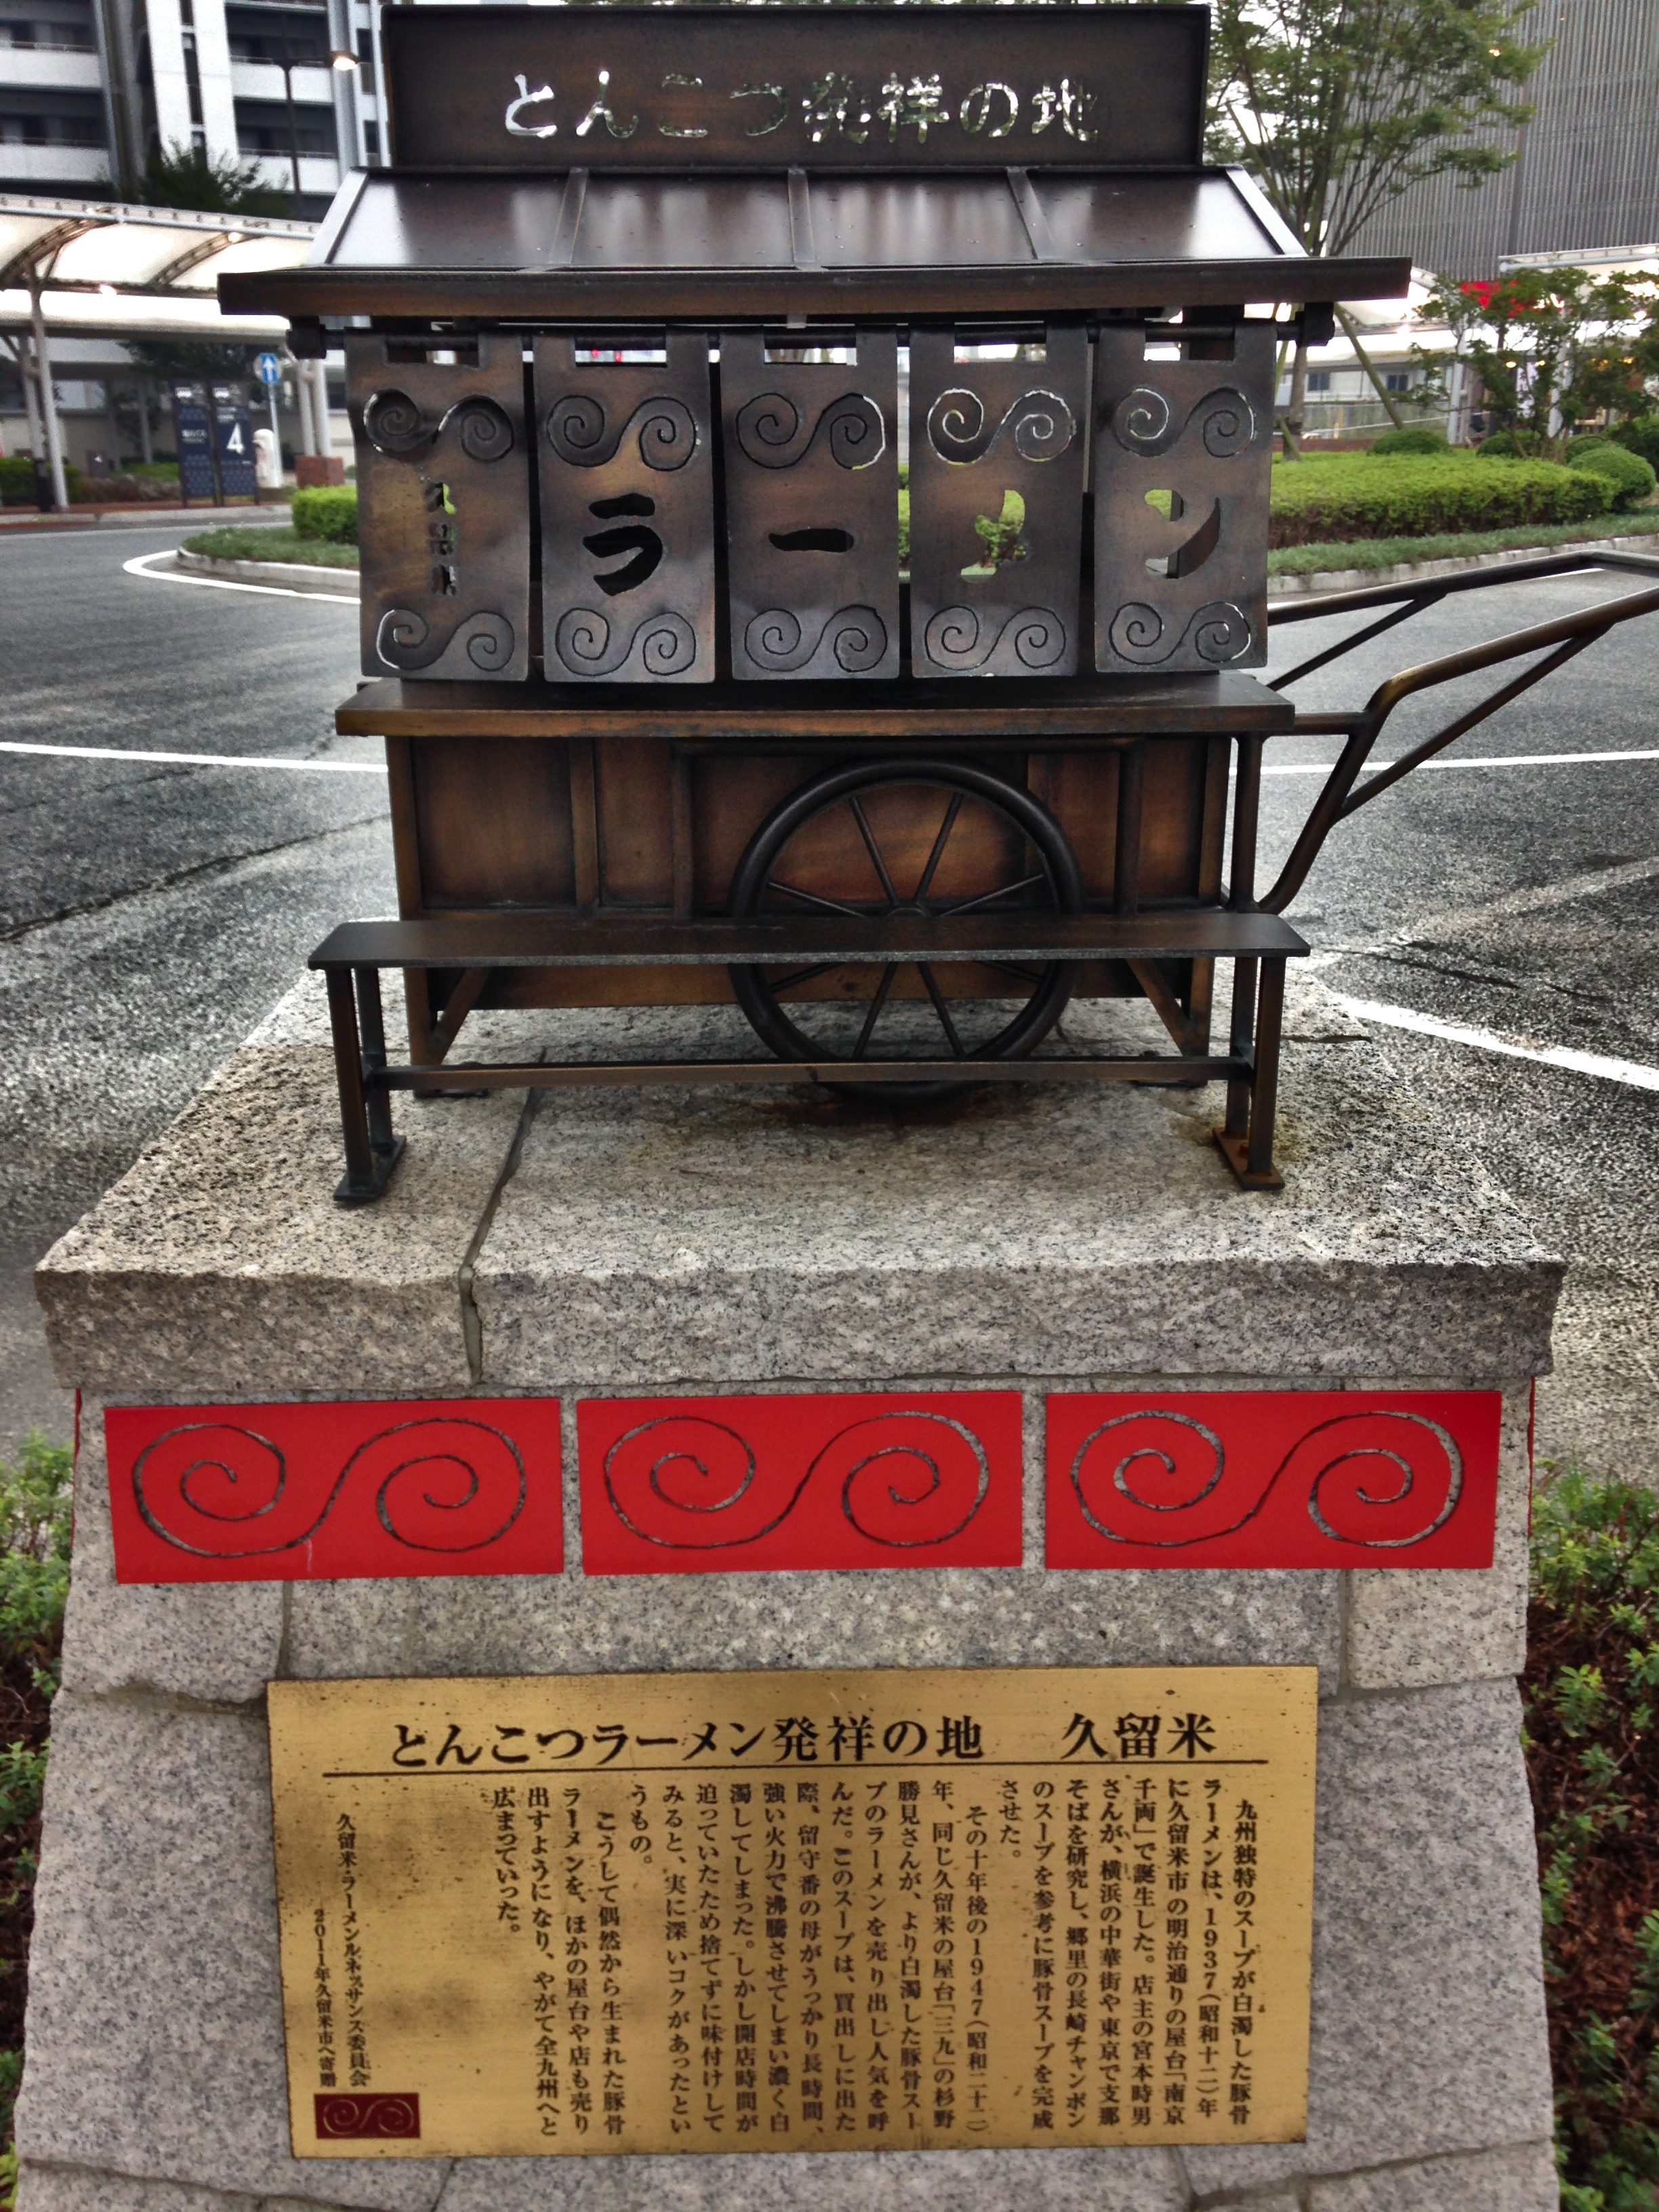 Sculpture Representing the Birthplace of Tonkotsu Ramen